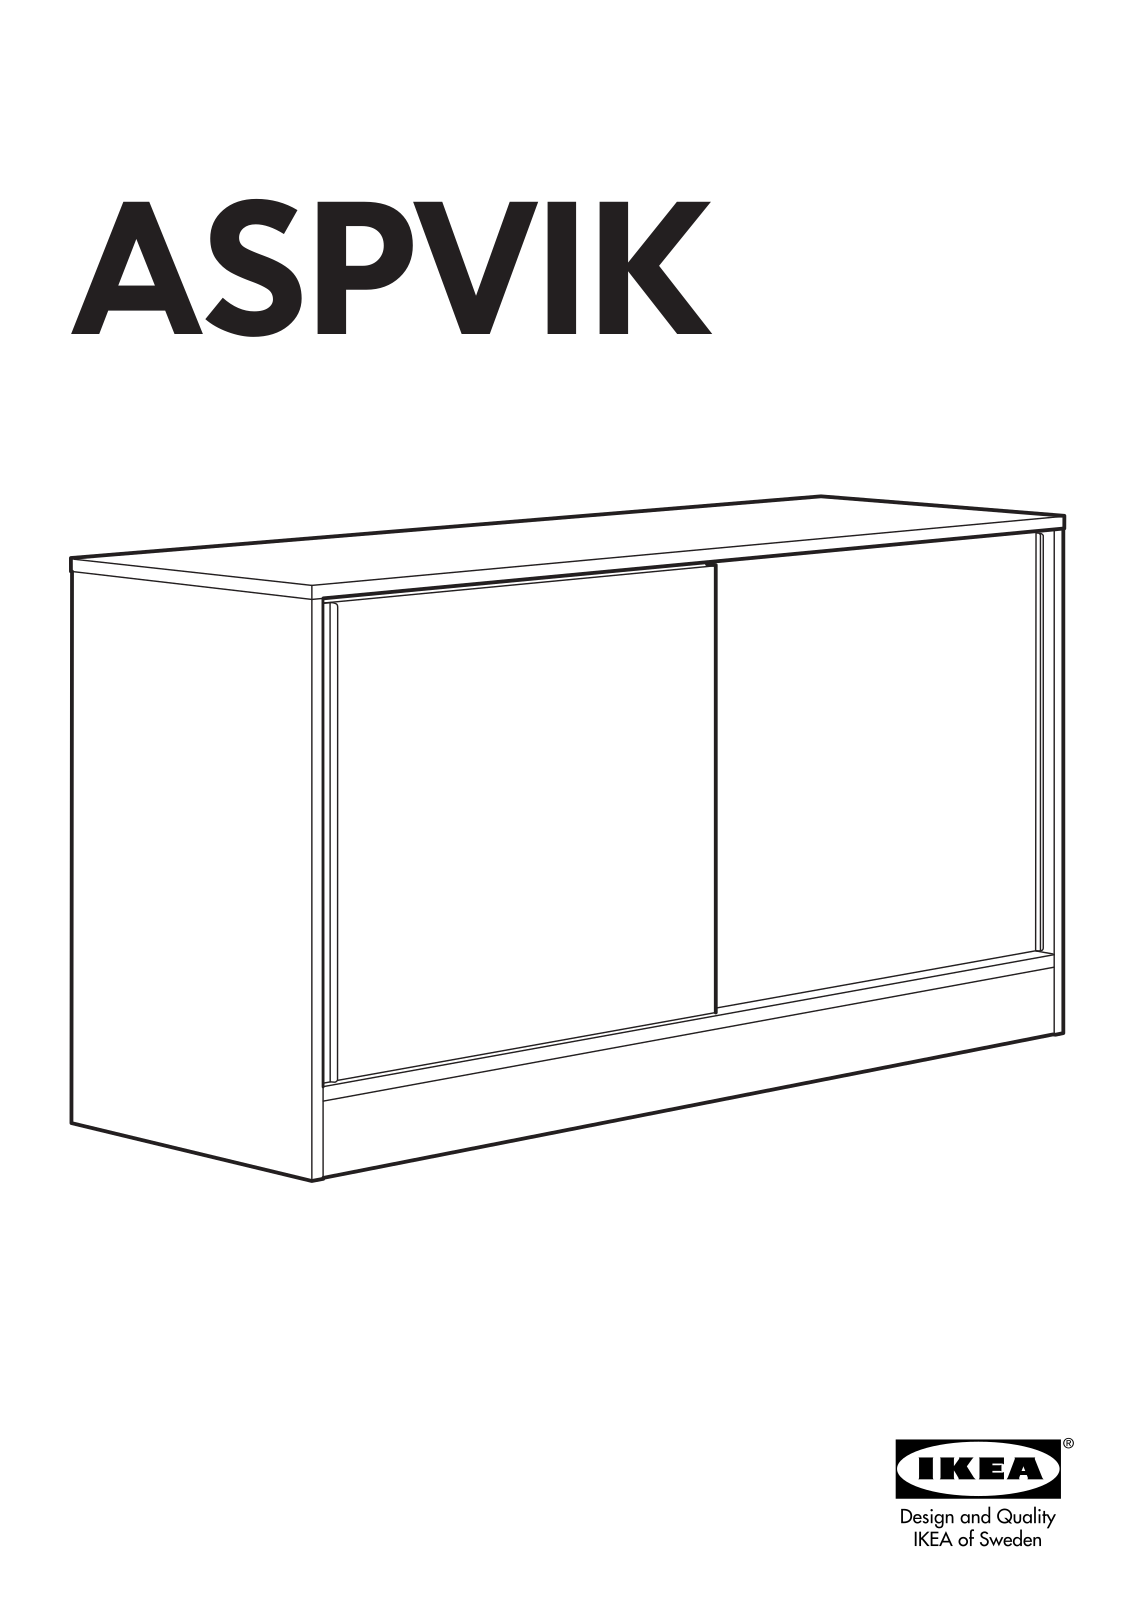 IKEA ASPVIK CAB-SLIDING DOORS 55X30 Assembly Instruction